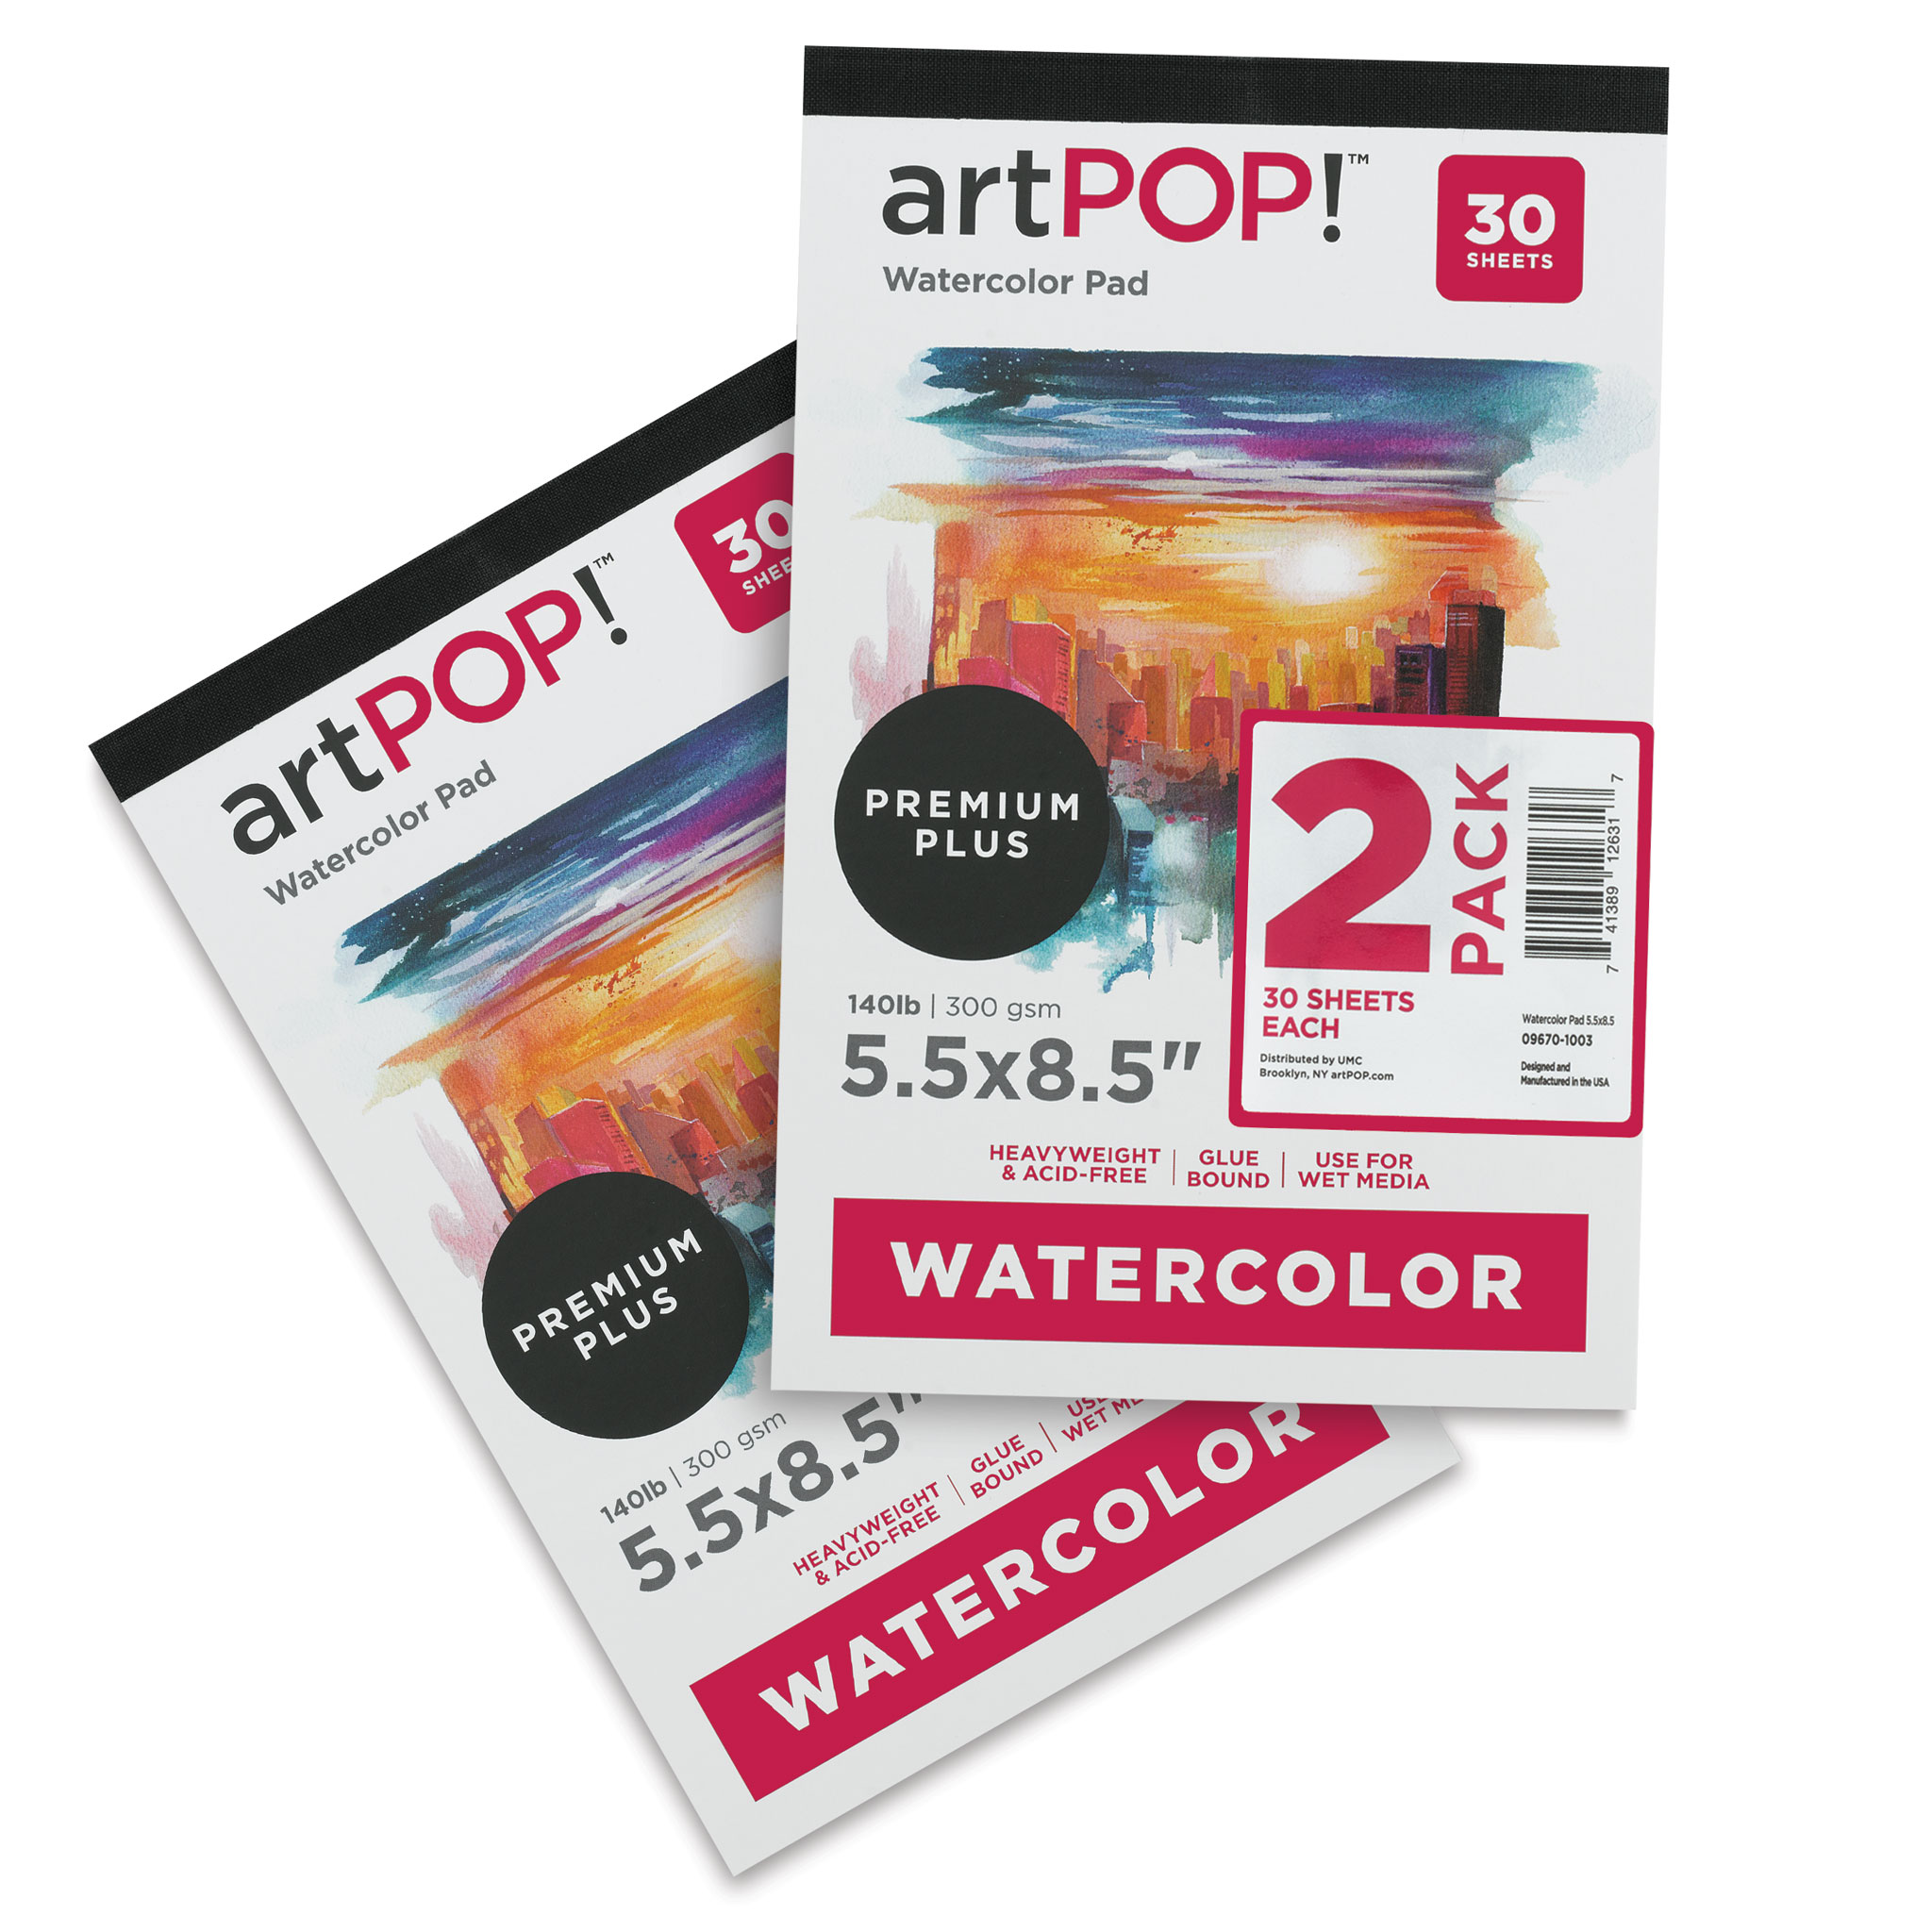 artPOP! Watercolor Half Pan Sets